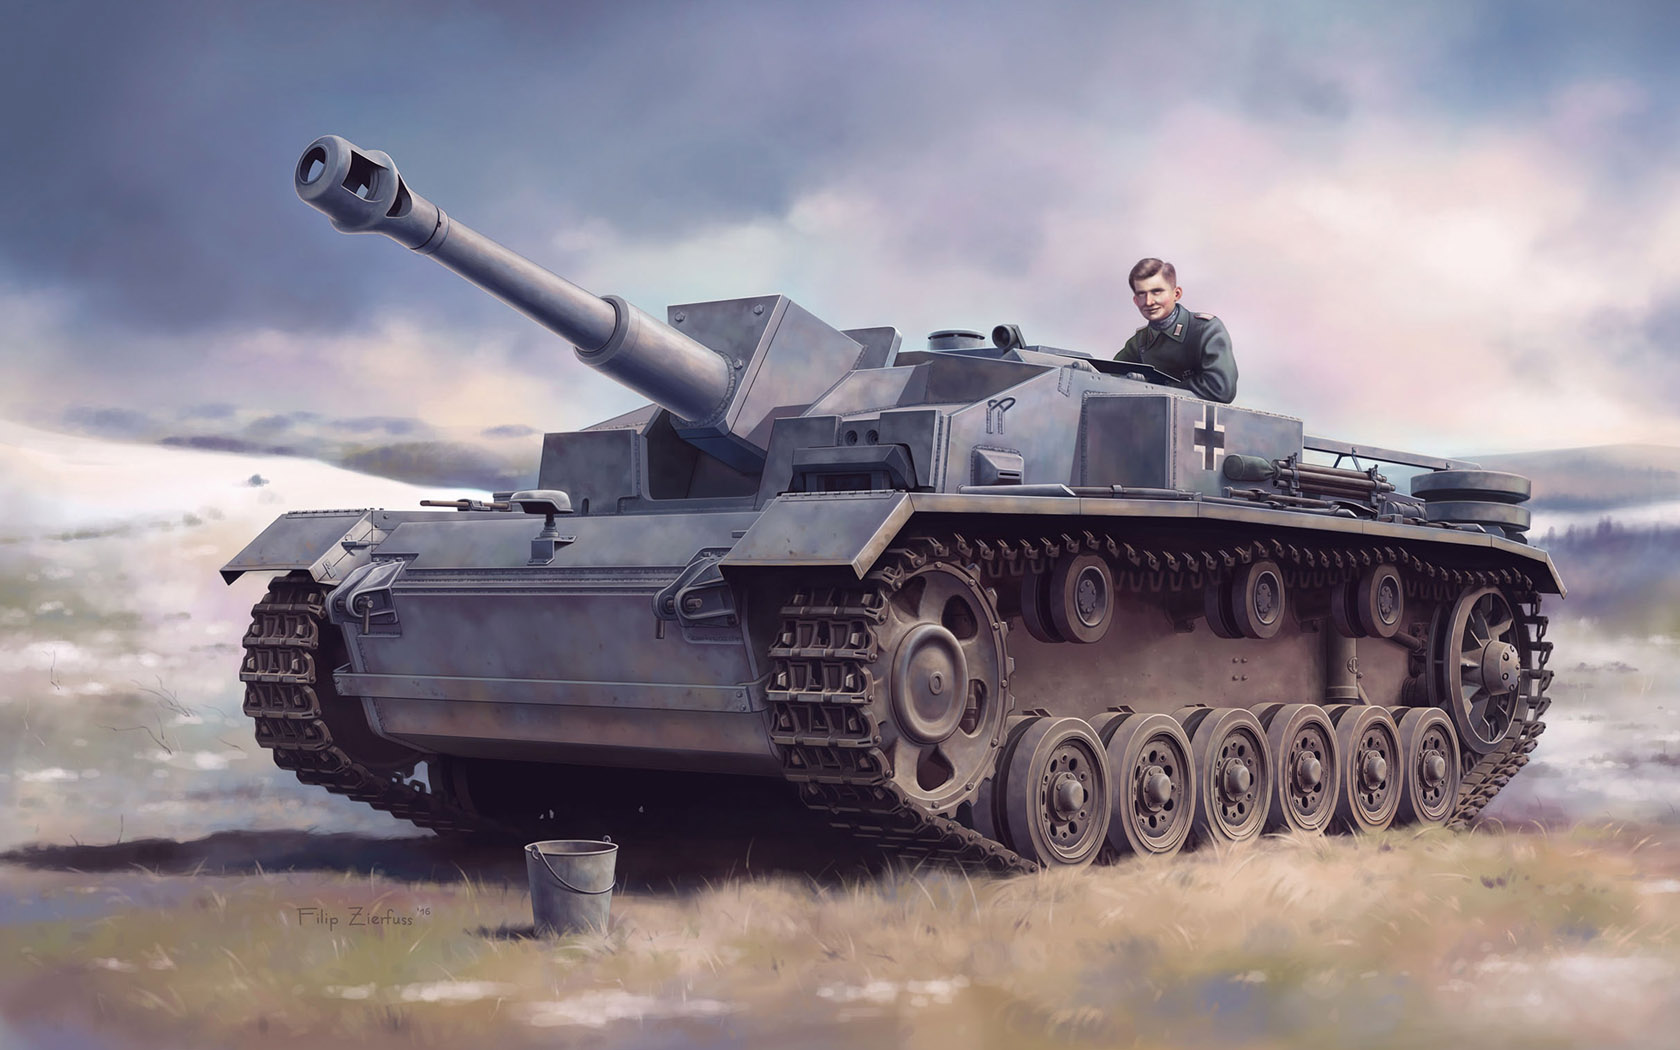 General 1680x1050 tank army military military vehicle artwork men soldier sky clouds smiling bucket Stug III German tanks World War II